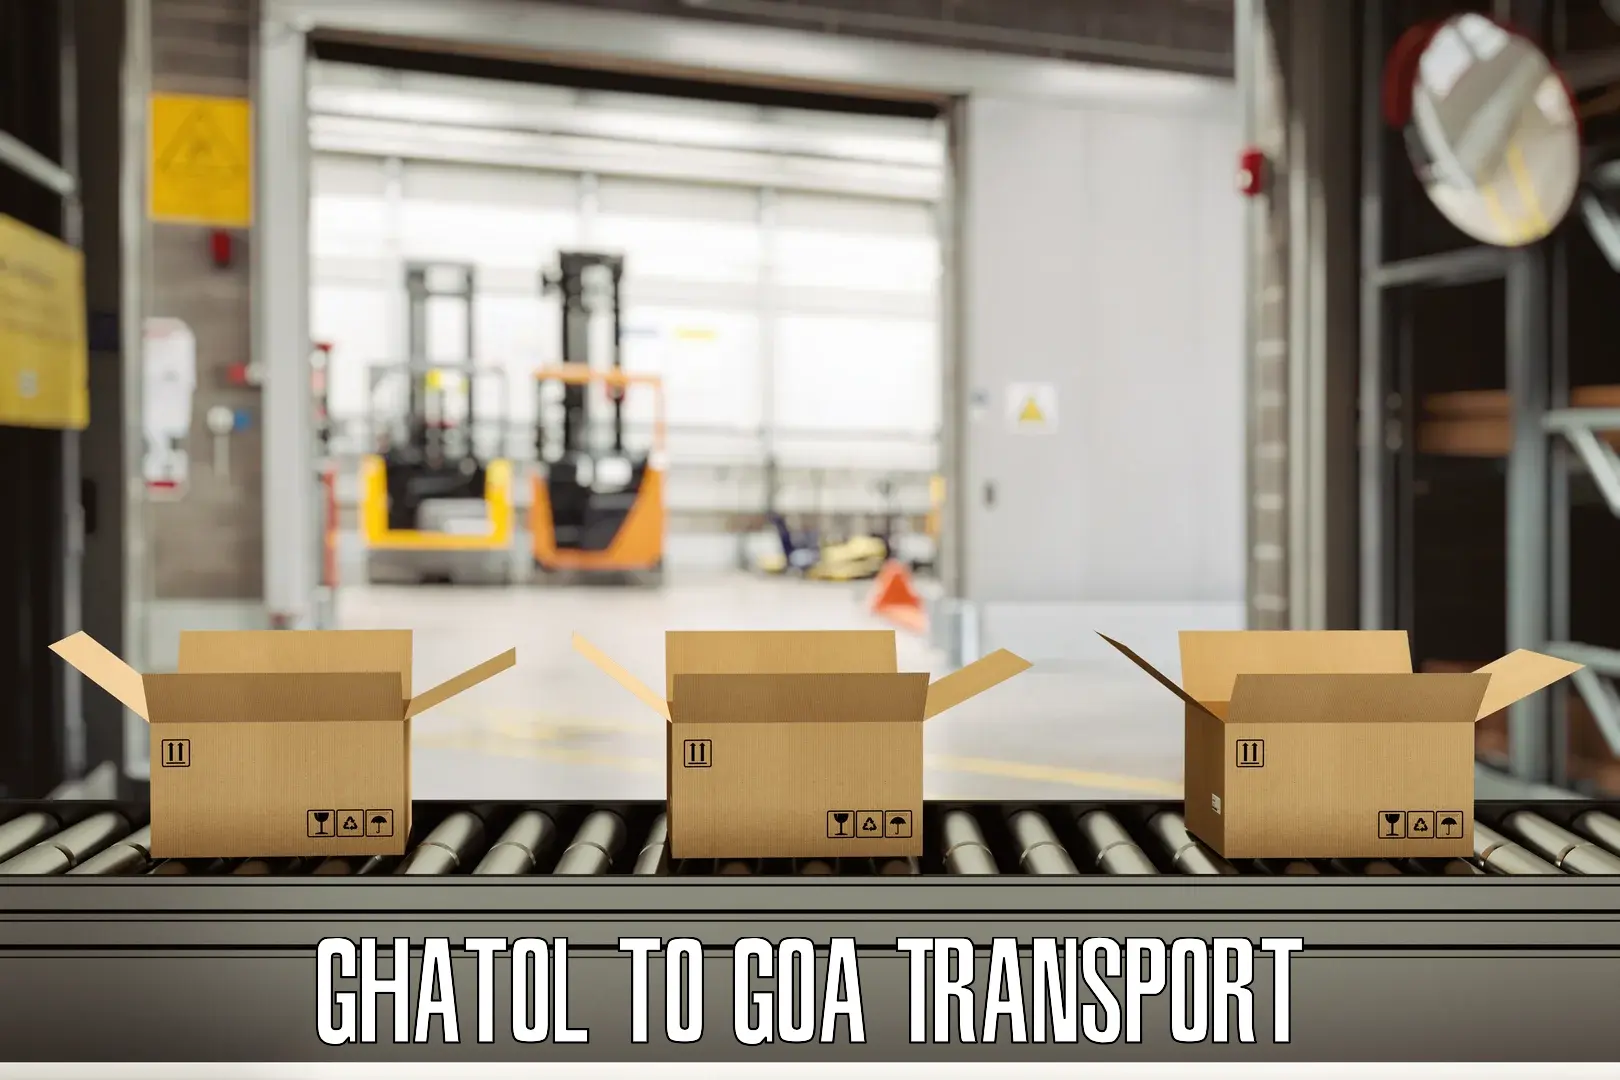 Transport in sharing Ghatol to Panaji